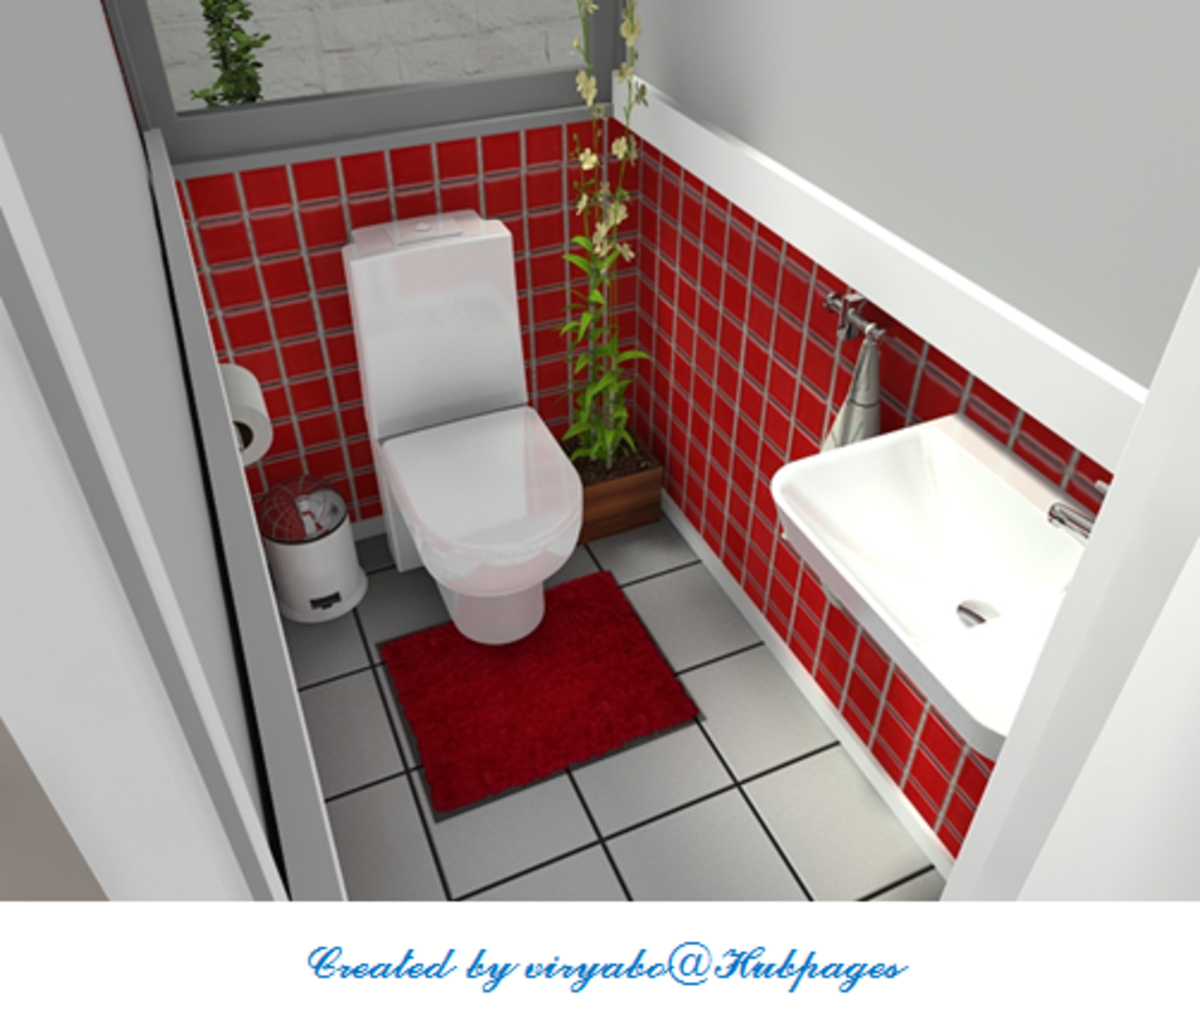 Best Kitchen and Bathroom Design Software | HubPages